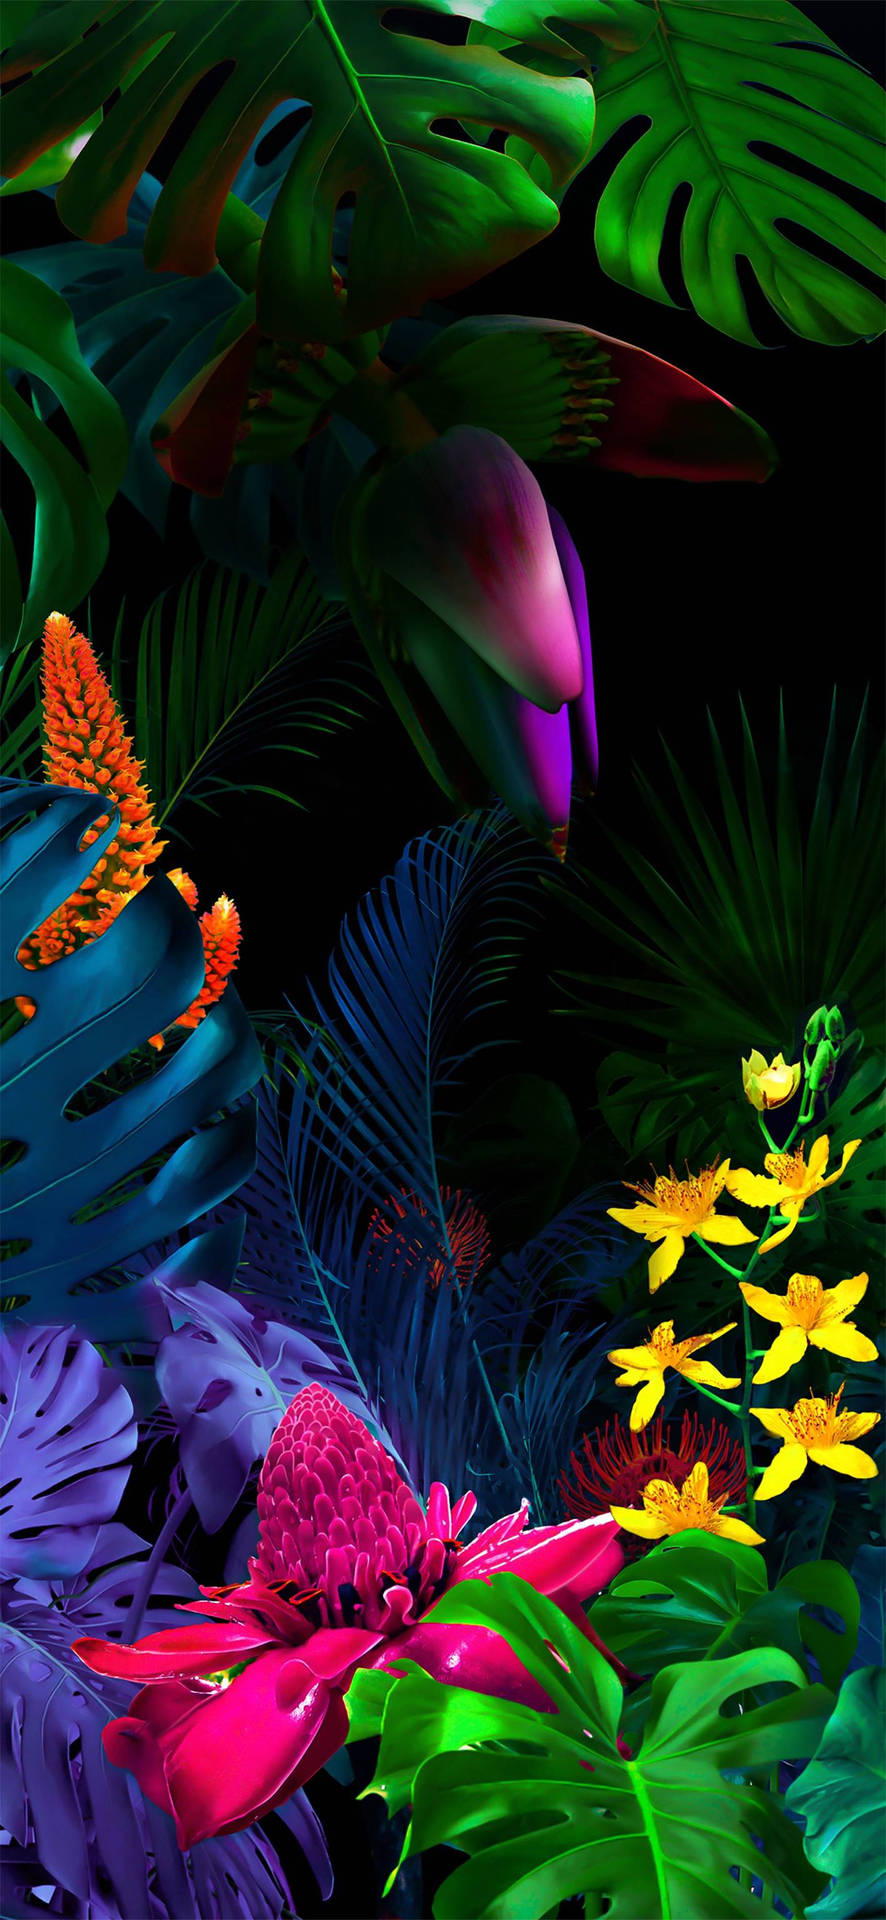 Artistic Digital Flower Display On An Lg Phone Background